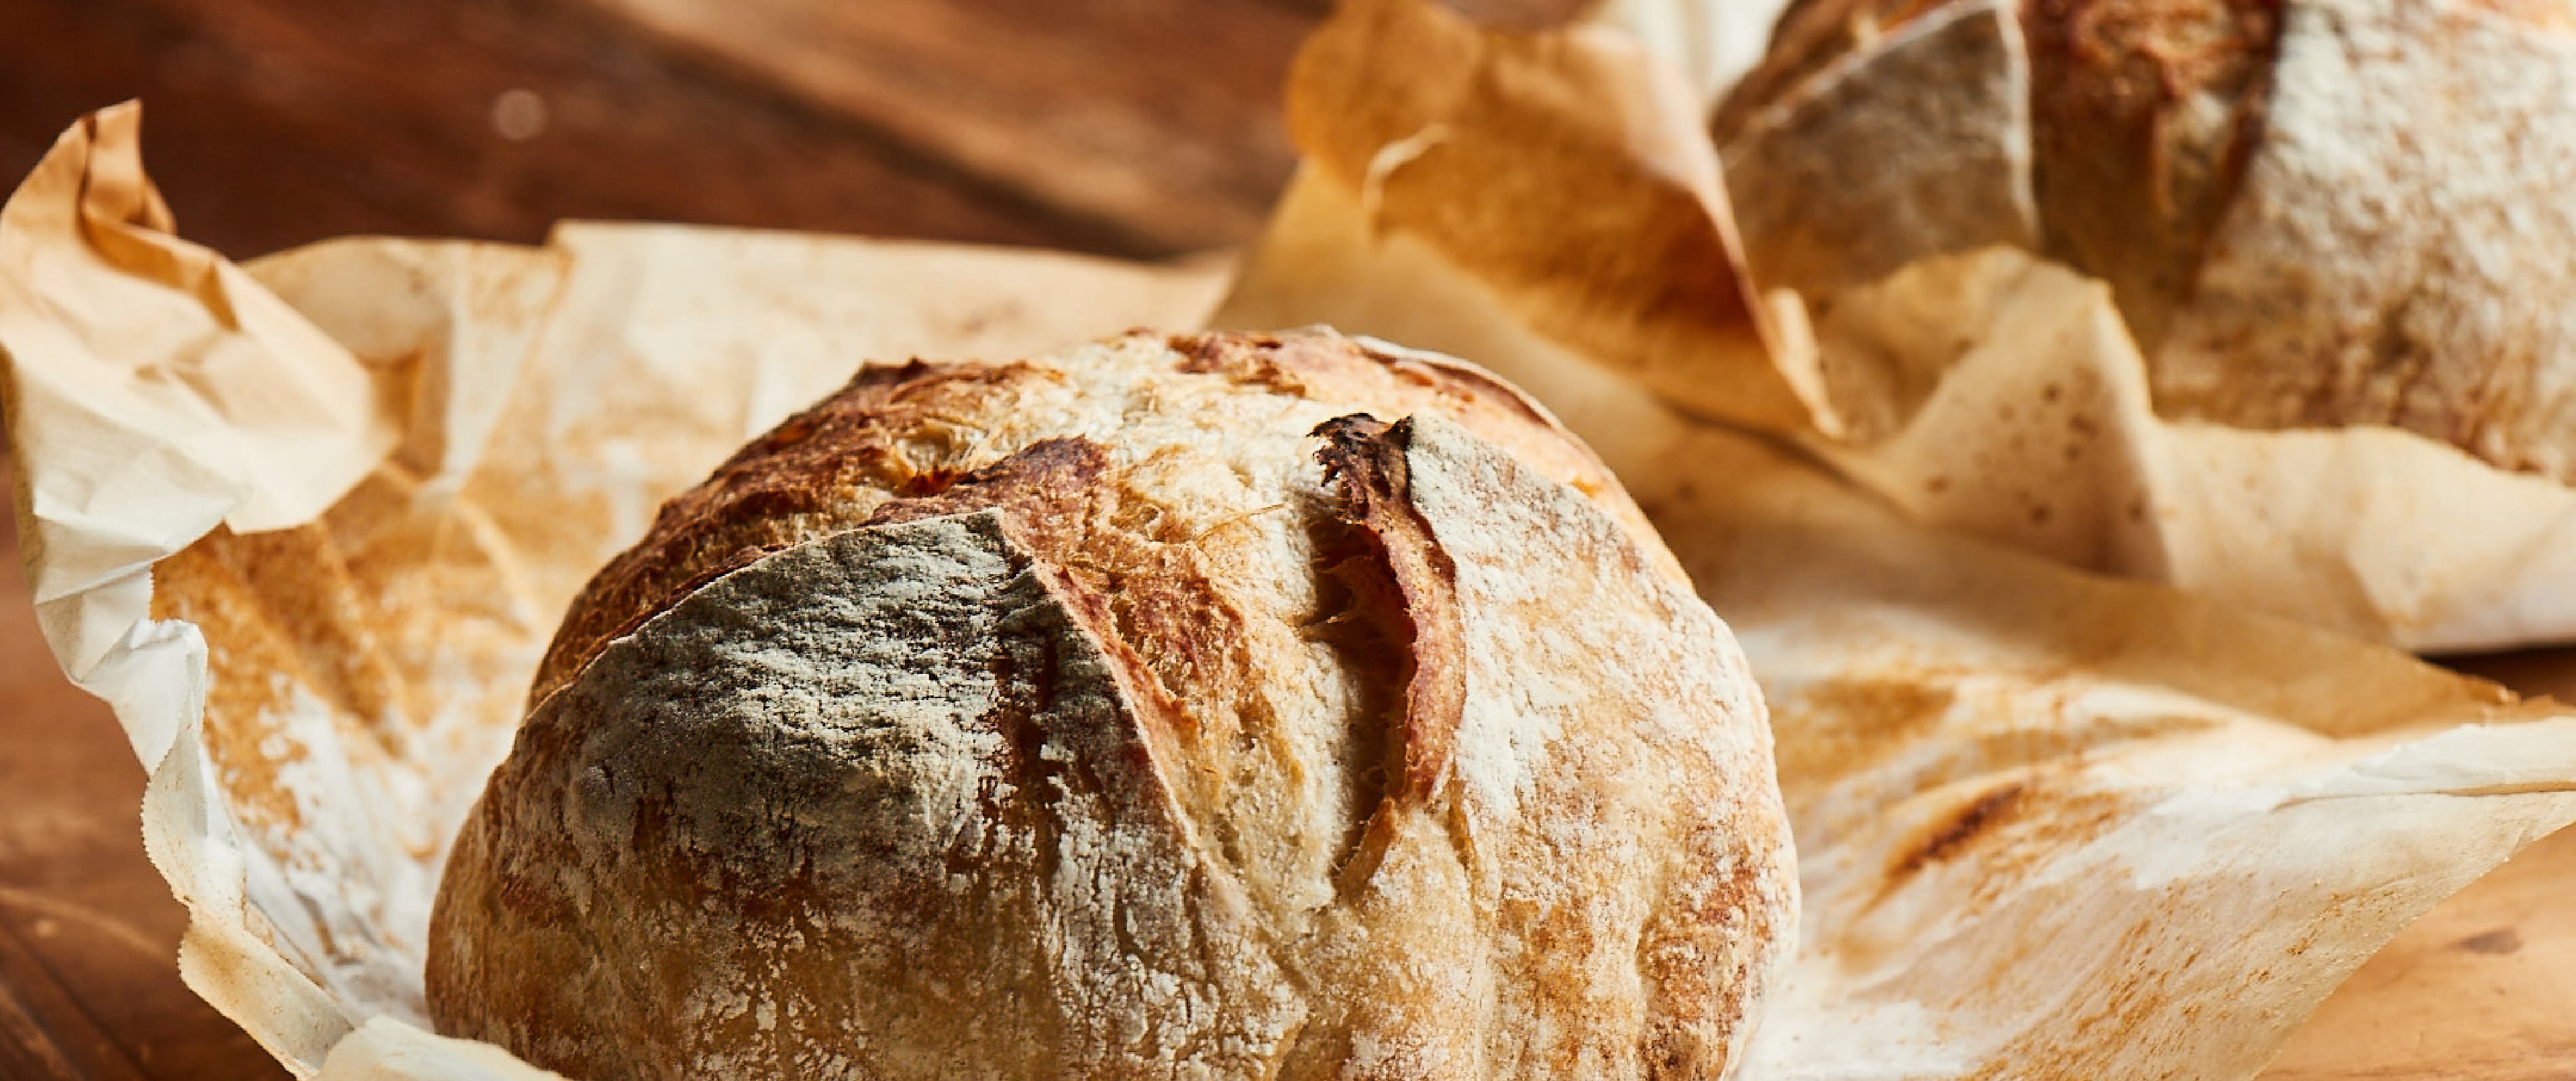 a freshly baked loaf of sourdough bread